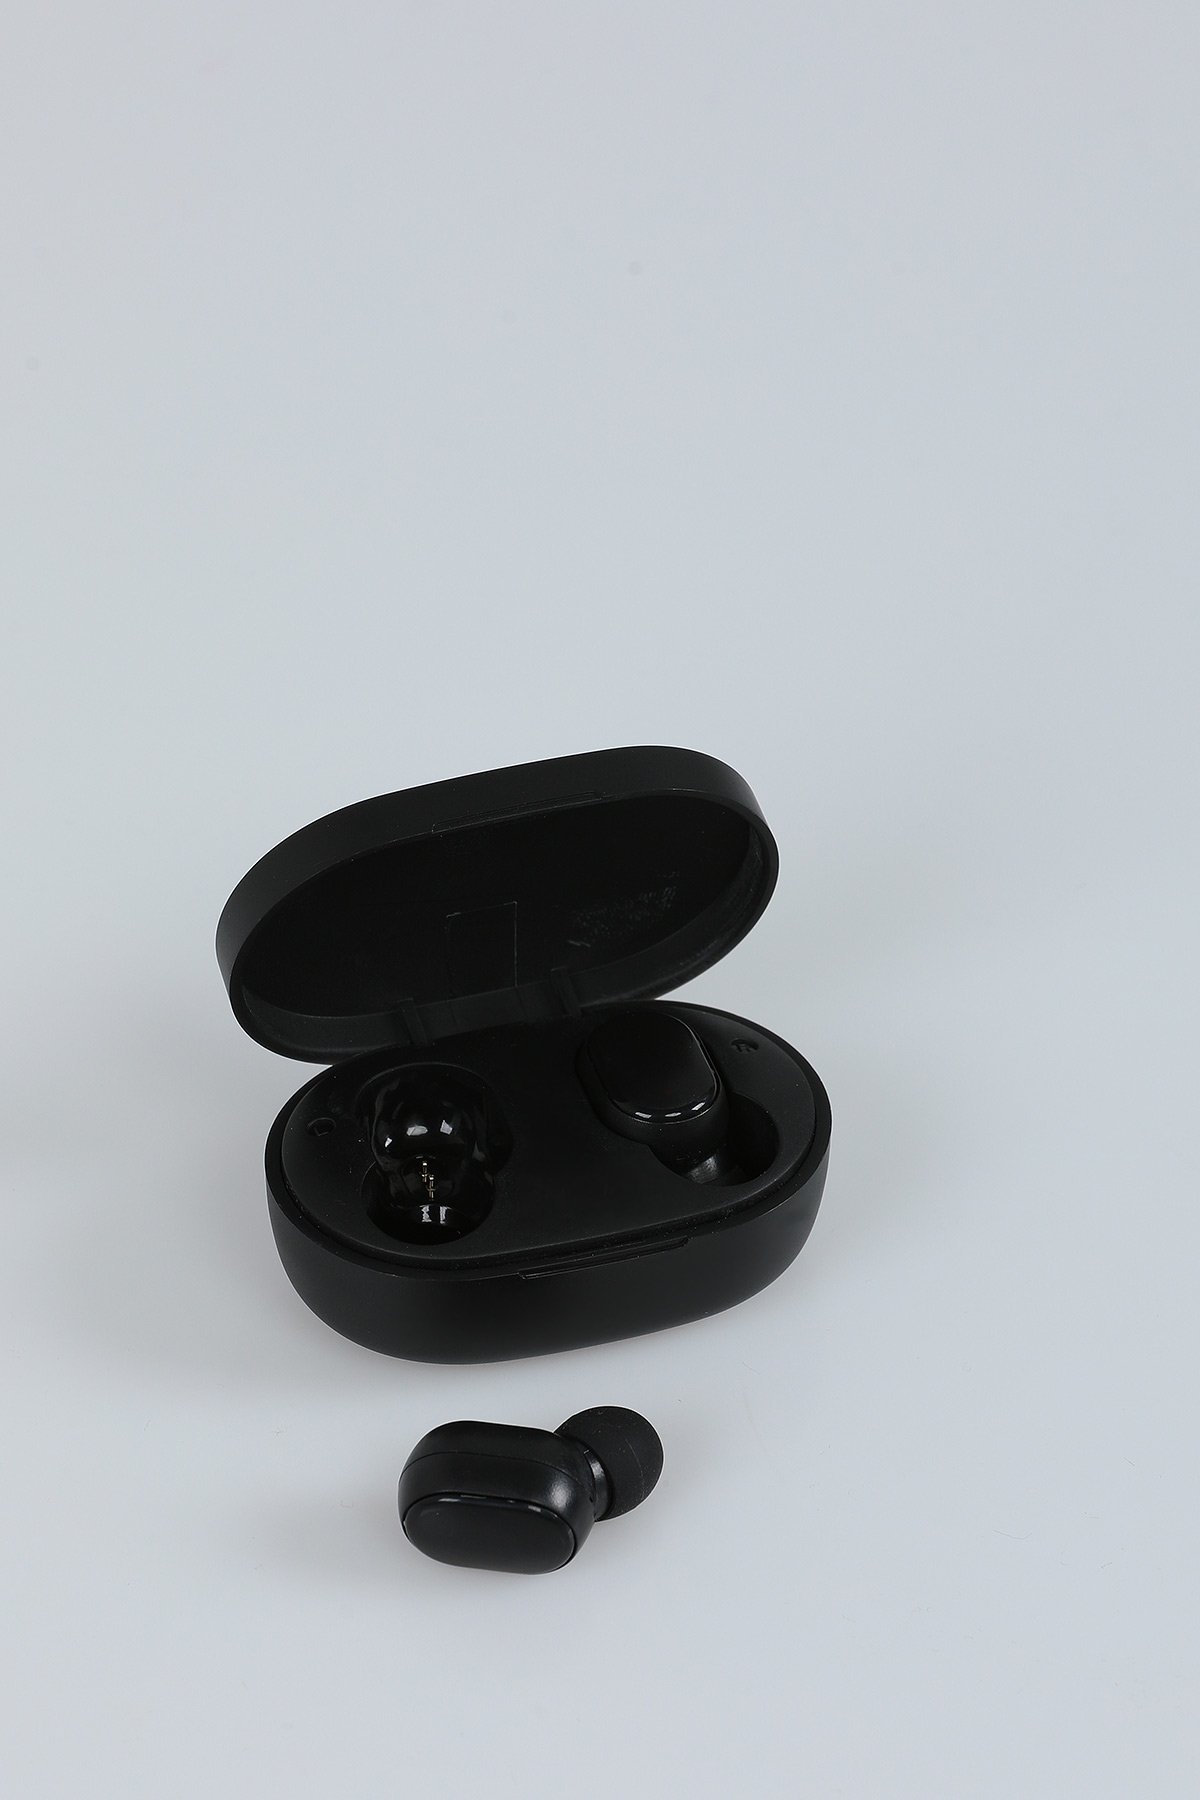 Siyah Sunix Blt-18 Bluetooth Kulaklık